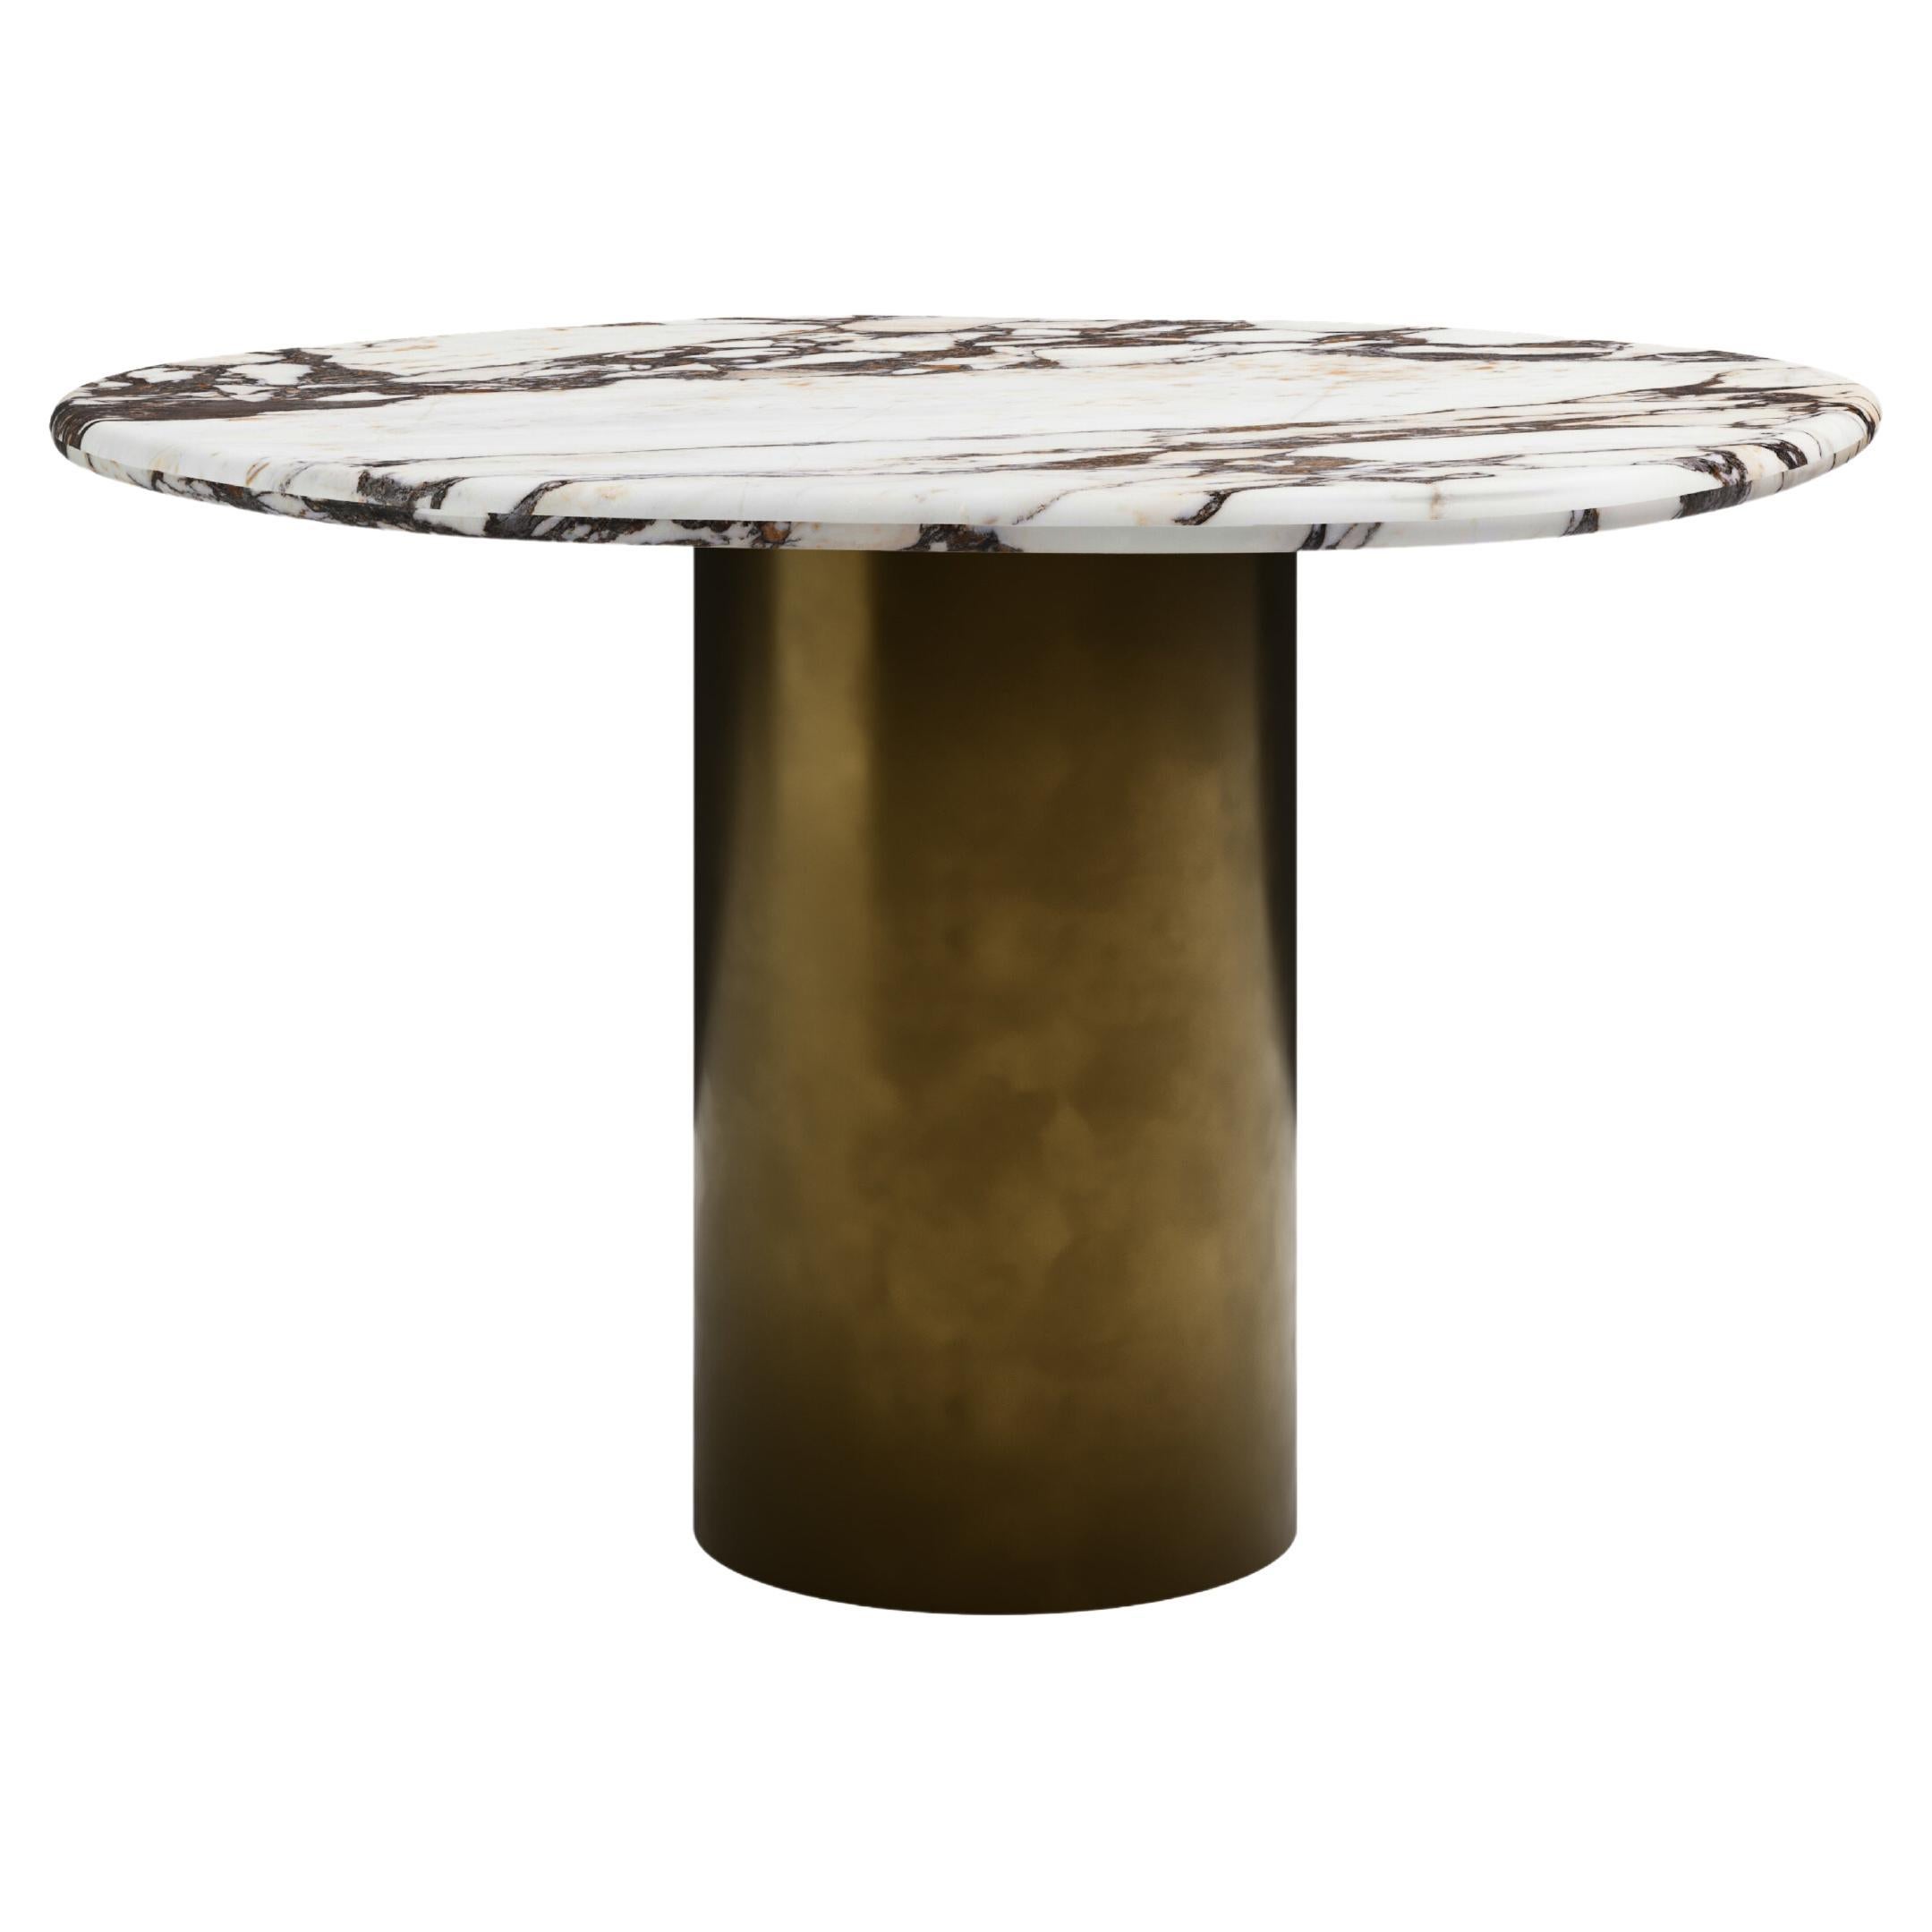 FORM(LA) Lago Round Dining Table 48”L x 48”W x 30”H Viola Marble & Bronze For Sale